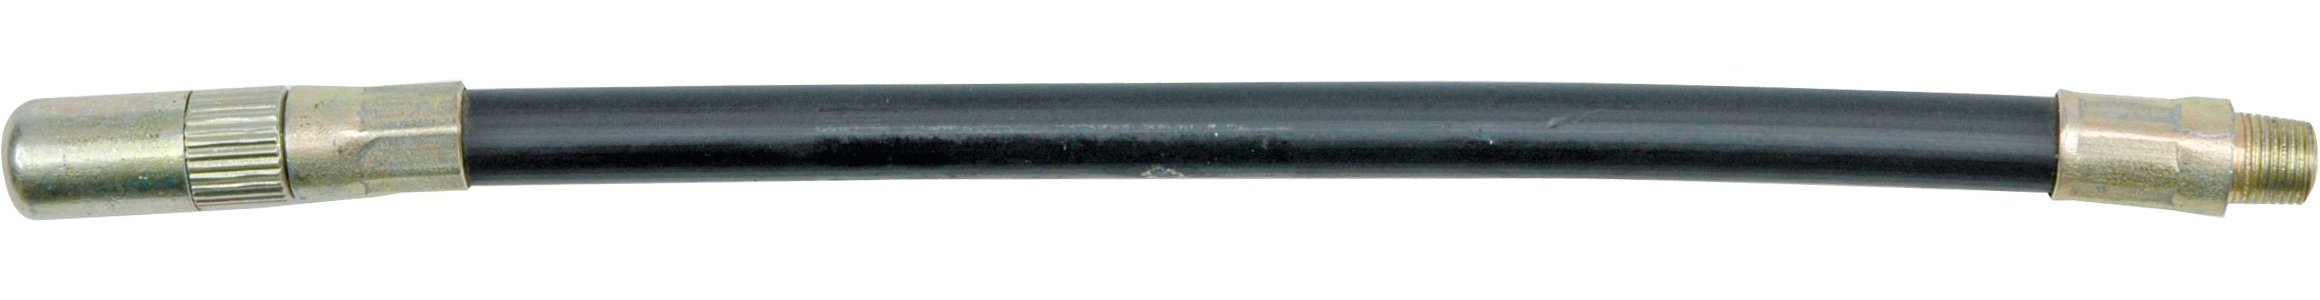 Hadice mazacího lisu 240 mm s koncovkou